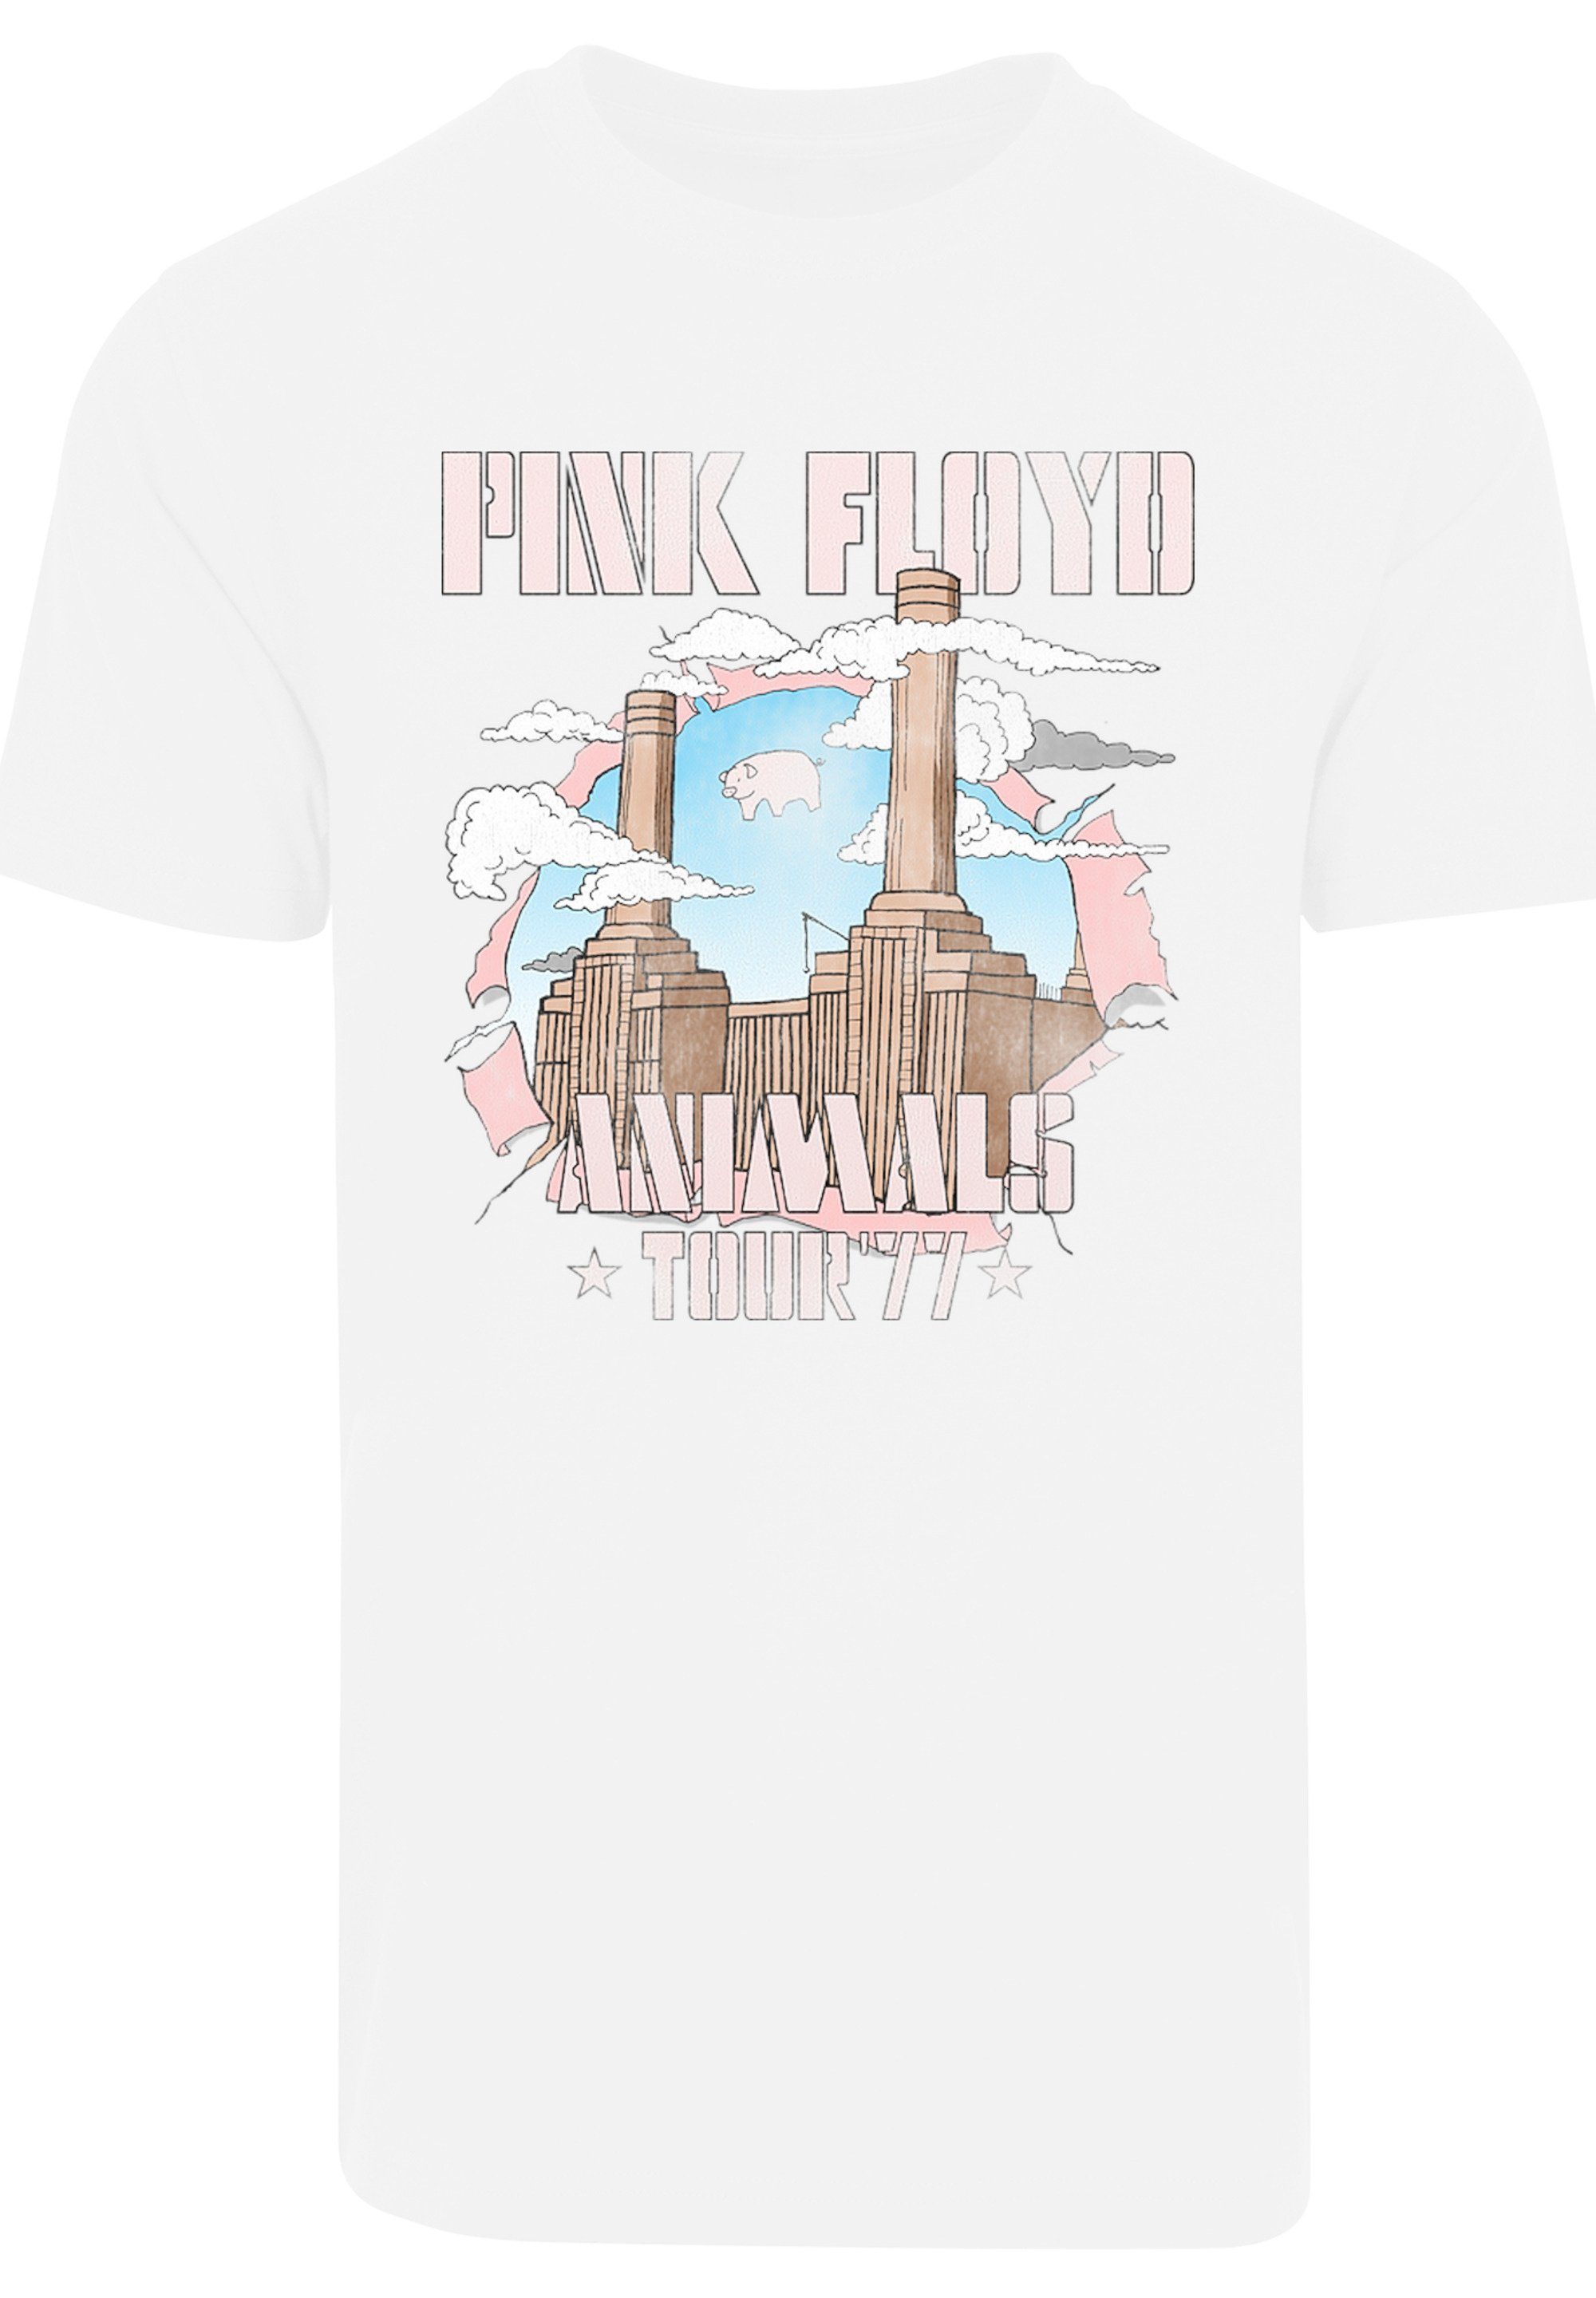 F4NT4STIC Print Pink Floyd Factory Animal T-Shirt